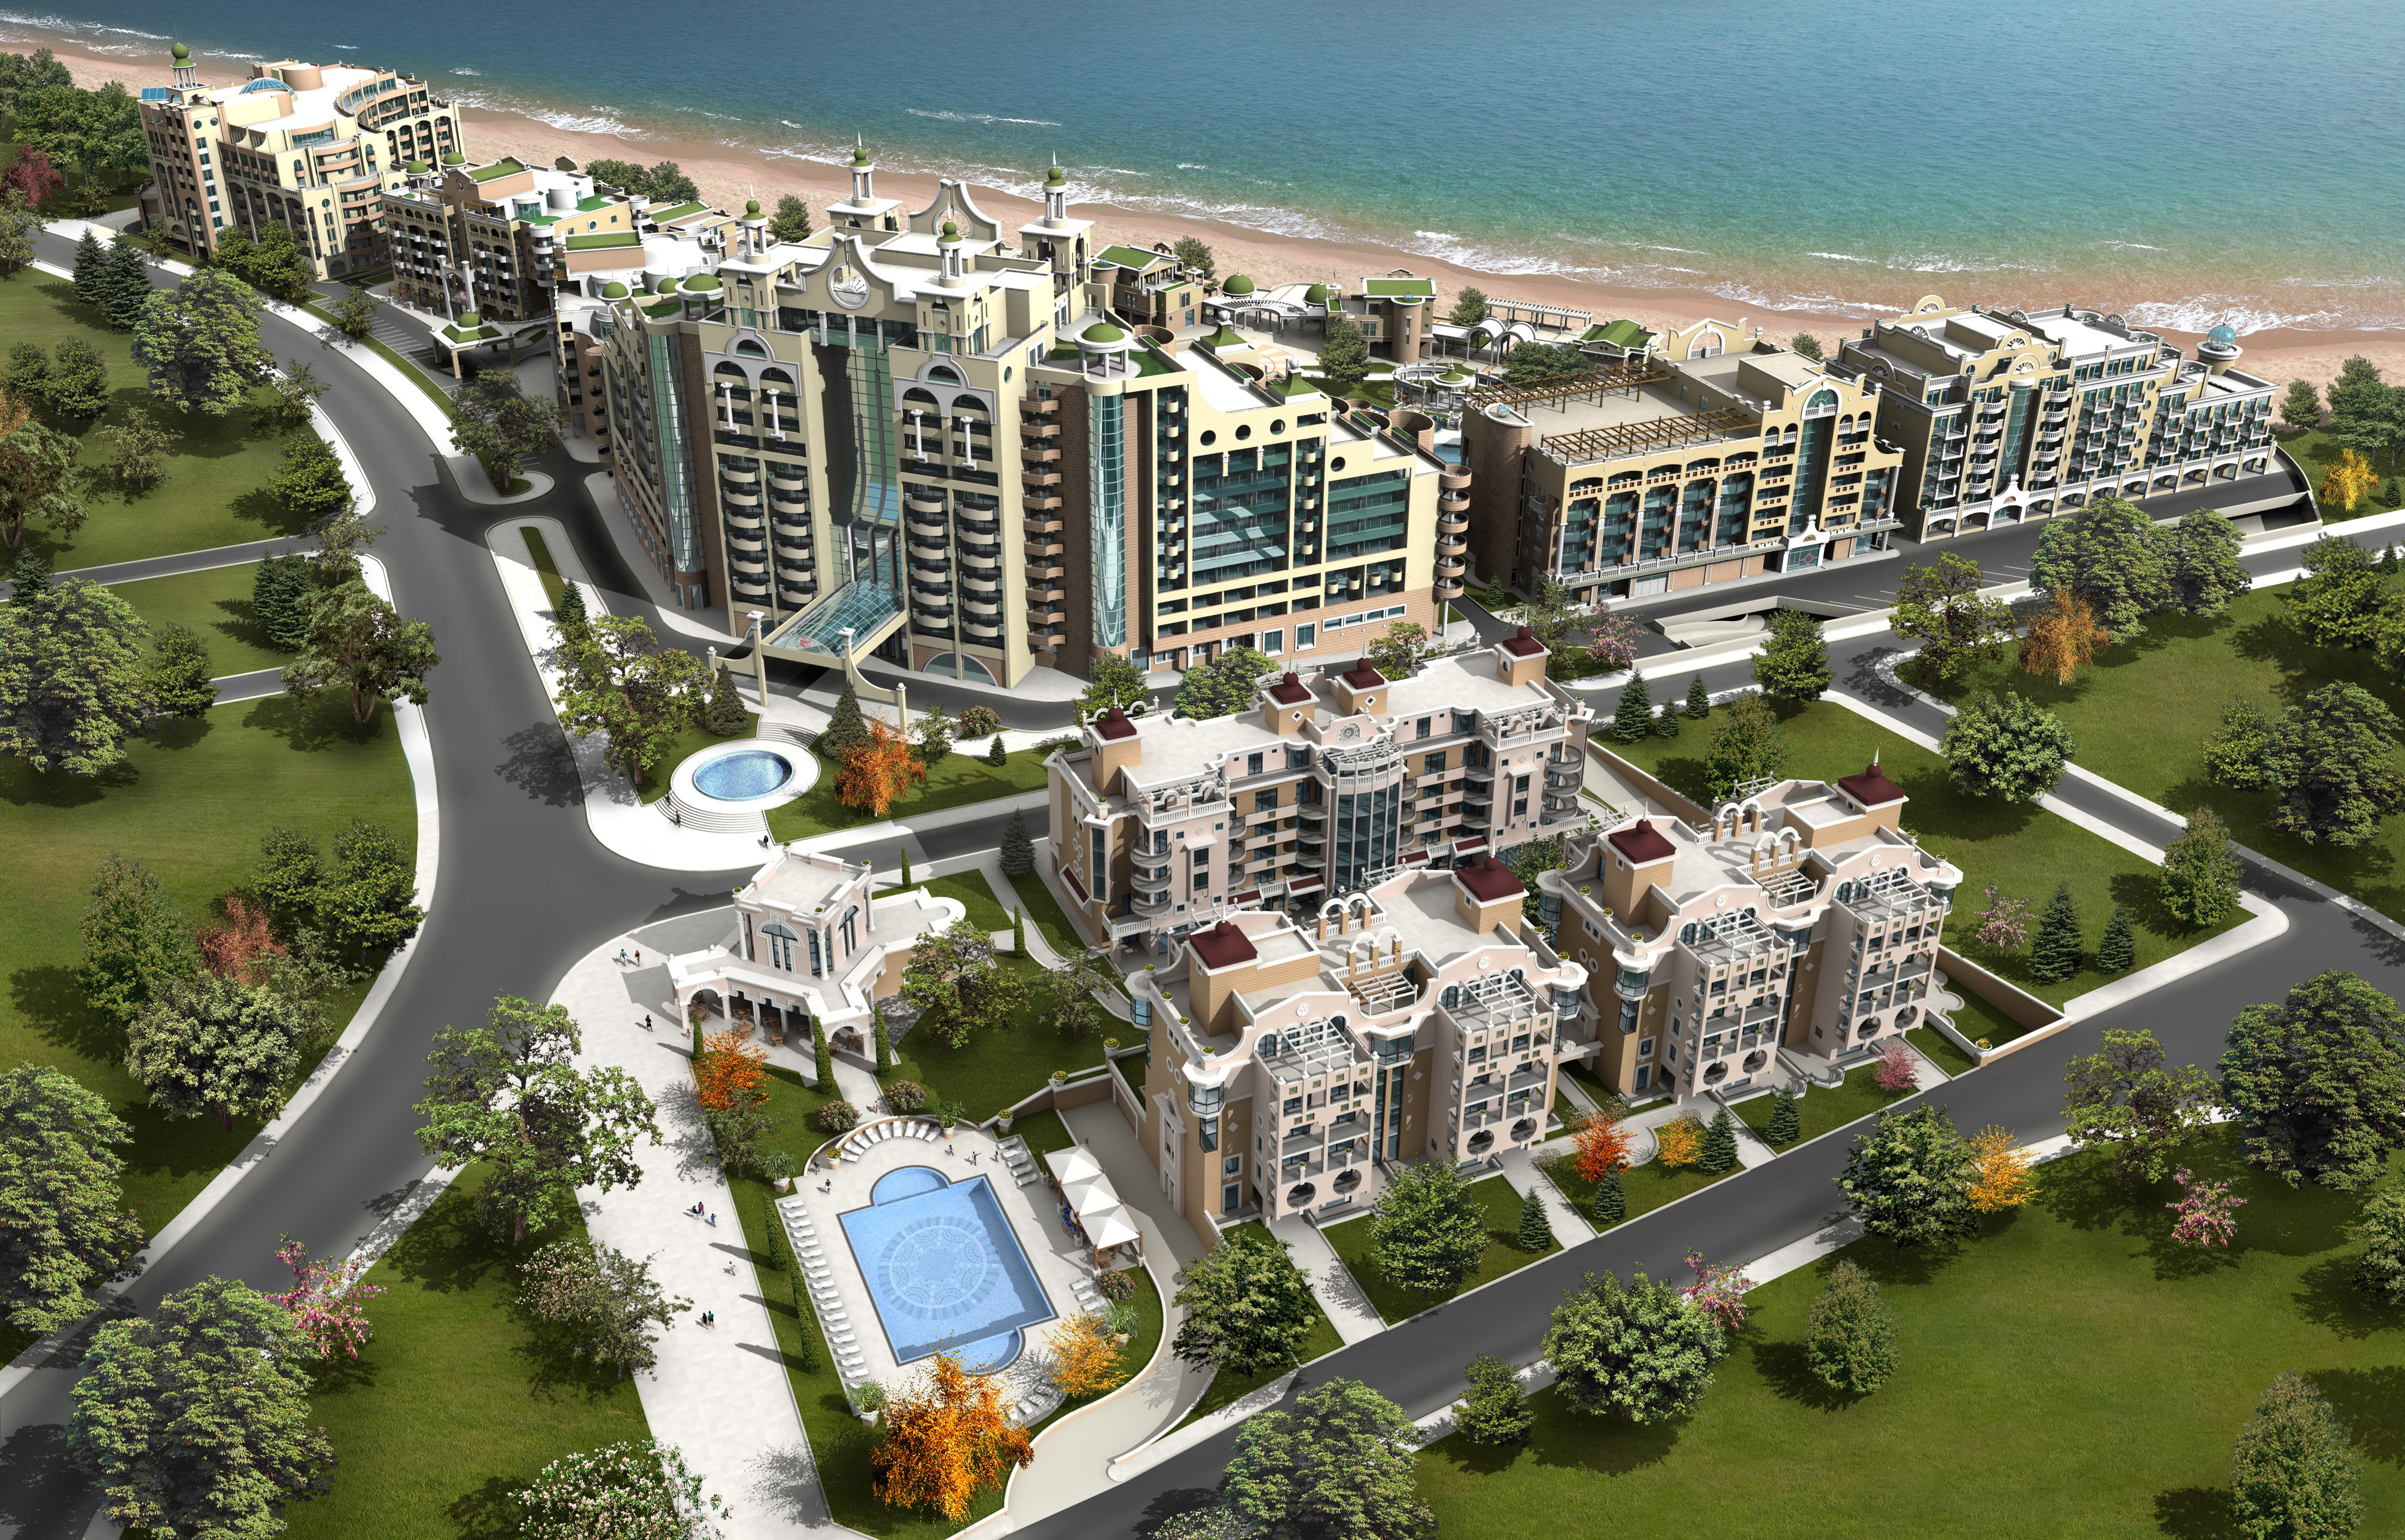 SUNSET Resort phase 2 presented by LNGroup Management Ltd